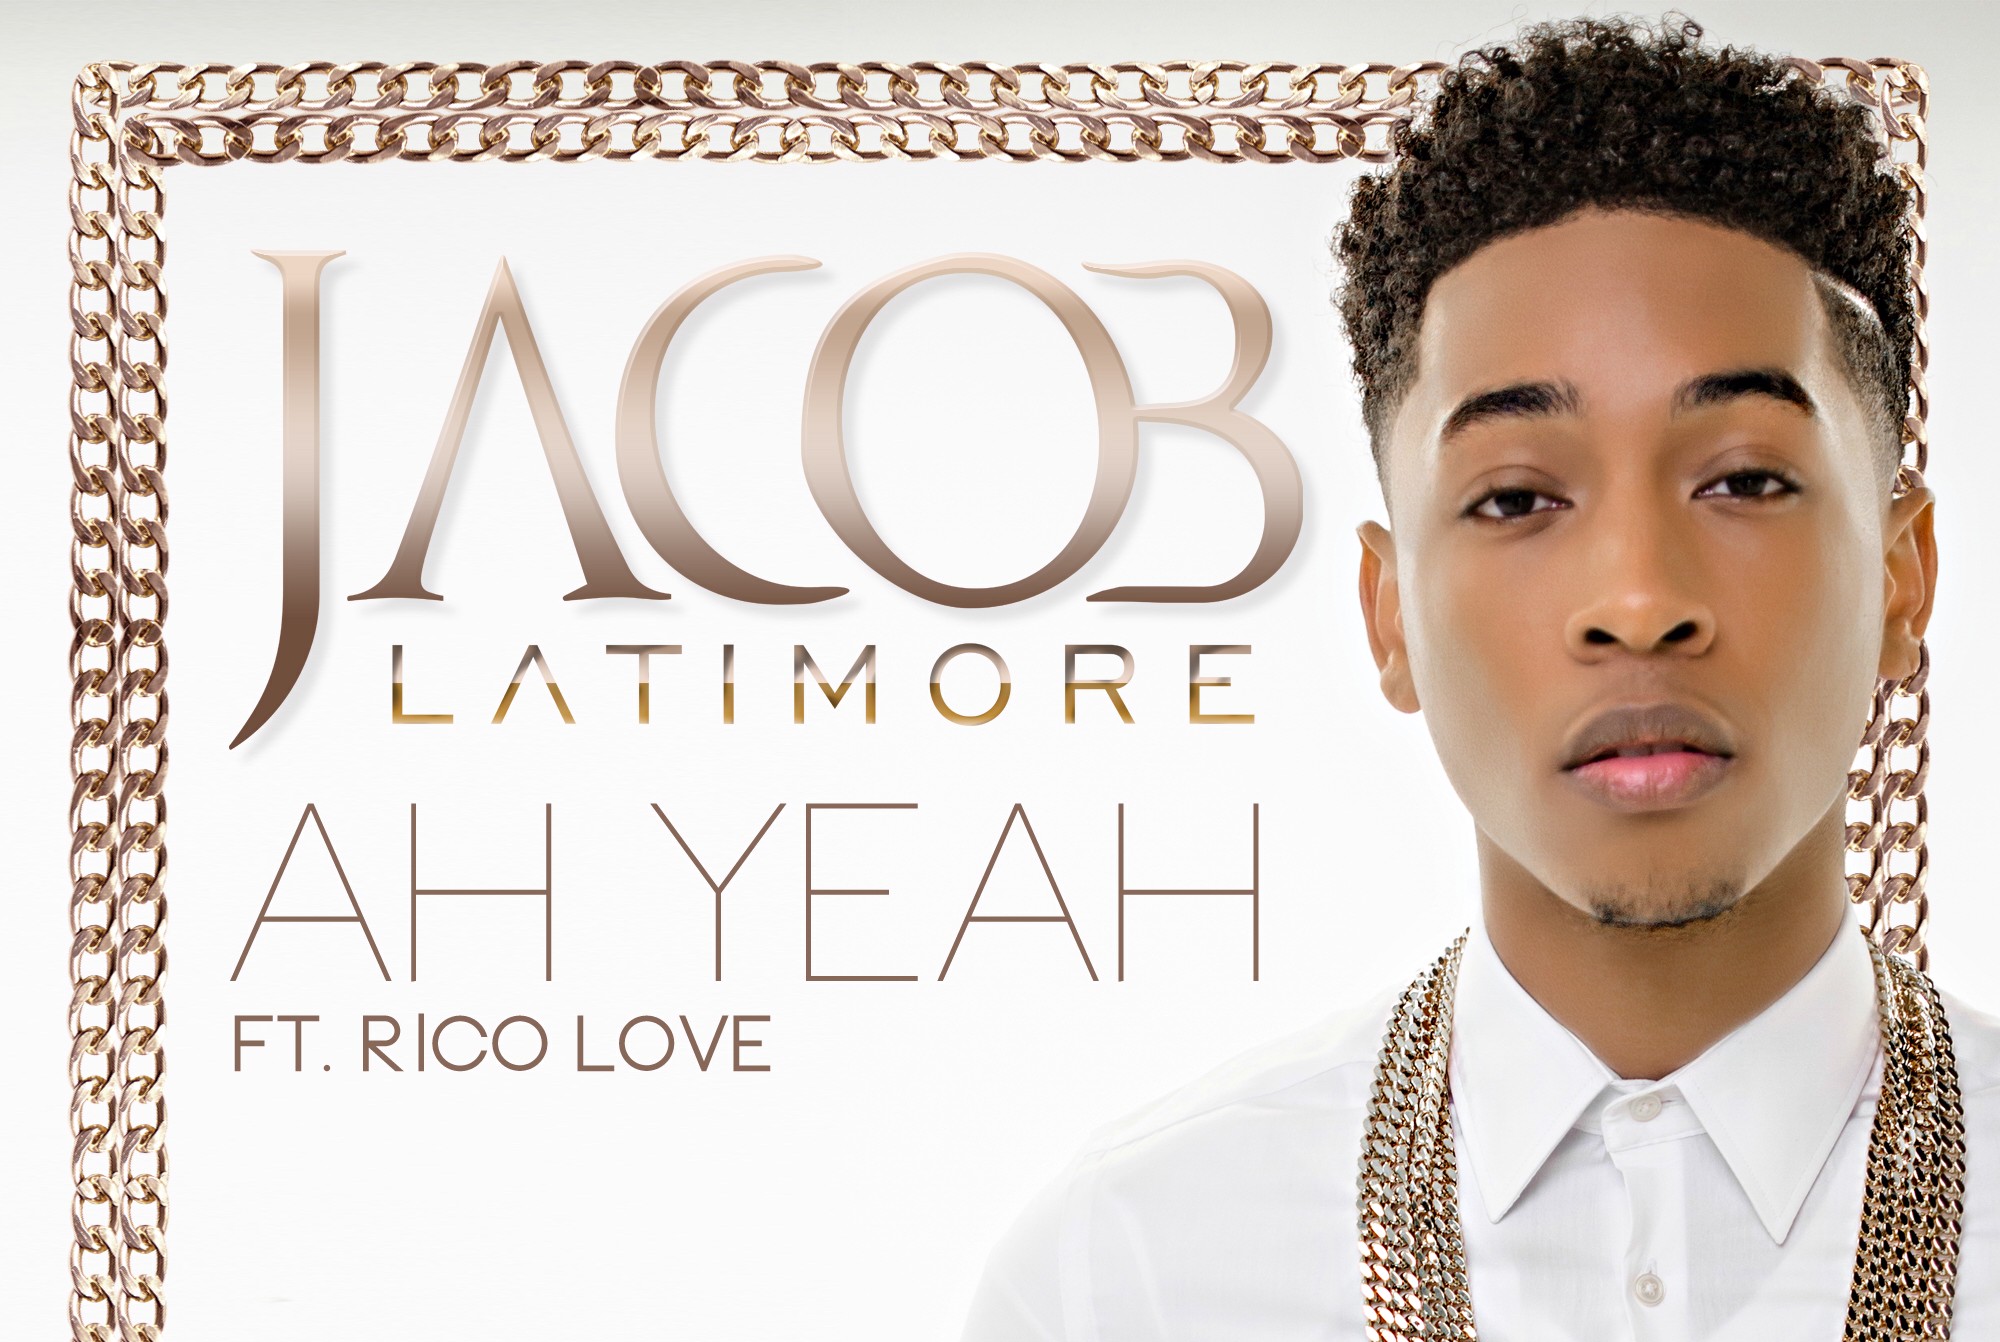 New Video: Jacob Latimore "Ah Yeah" featuring Rico Love